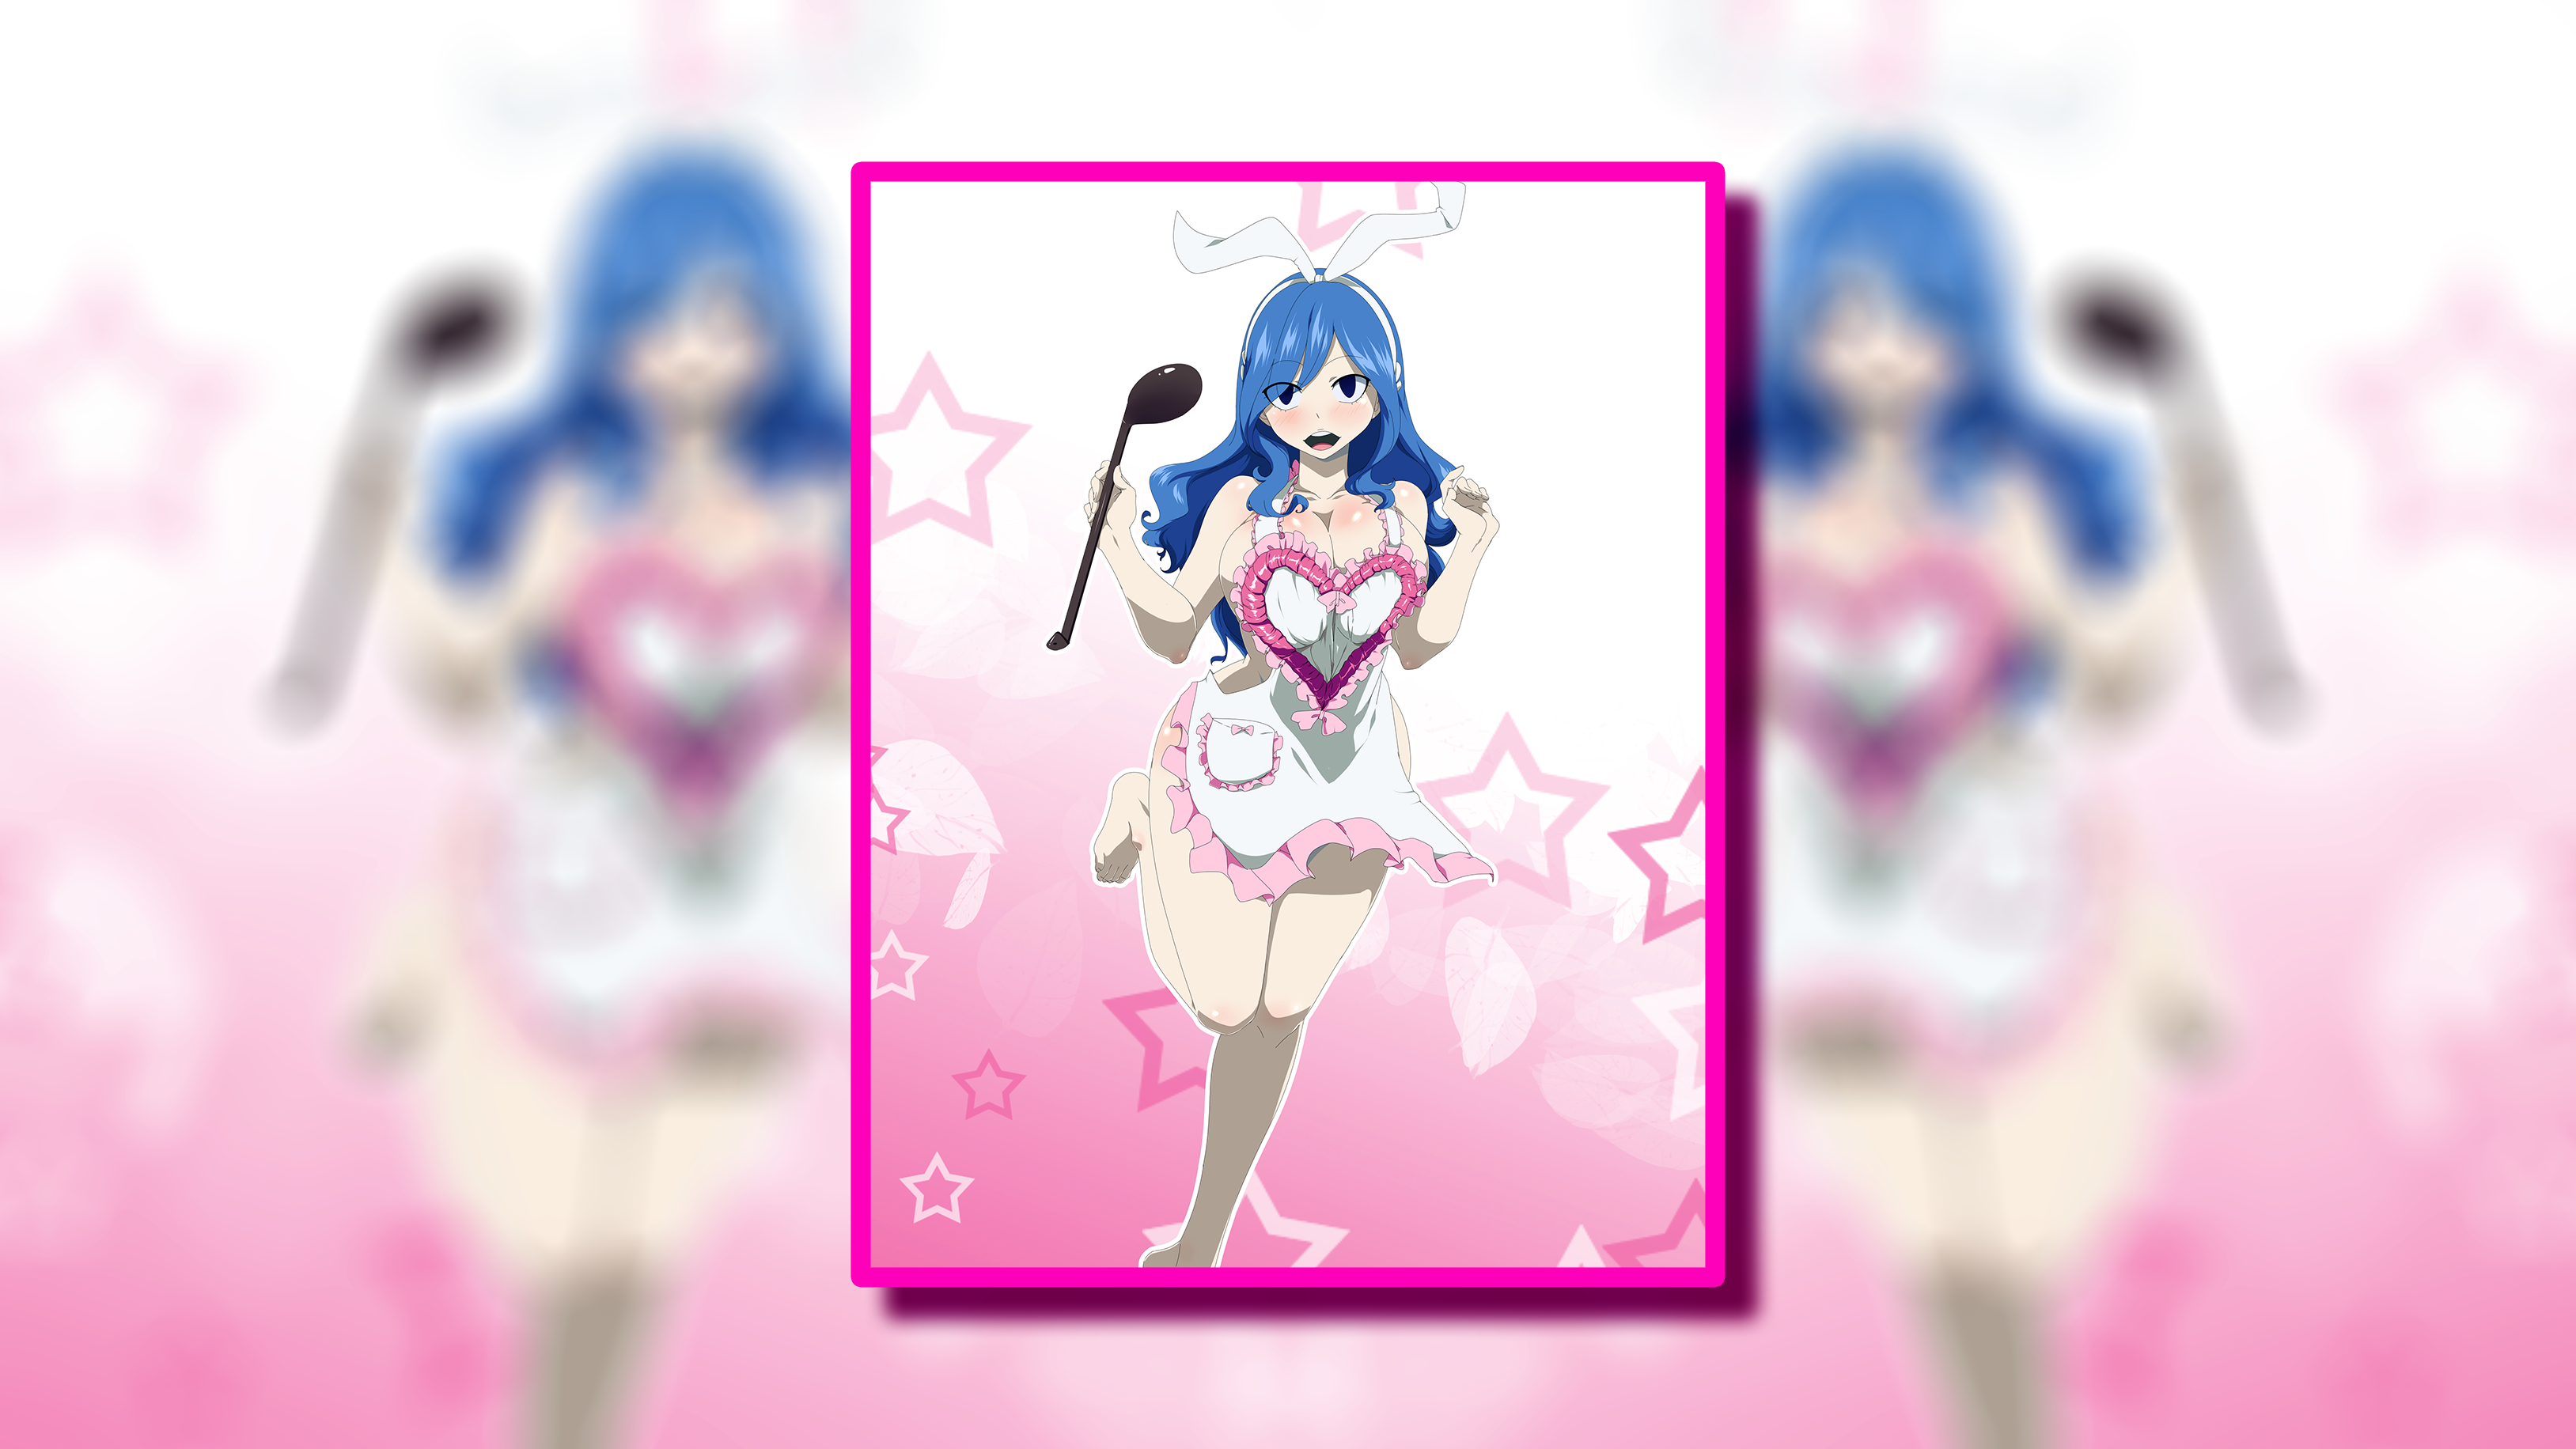 Anime 3256x1832 anime anime girls Fairy Tail Lockser Juvia long hair blue hair blue eyes blushing cleavage thighs ecchi big boobs partially clothed apron naked apron